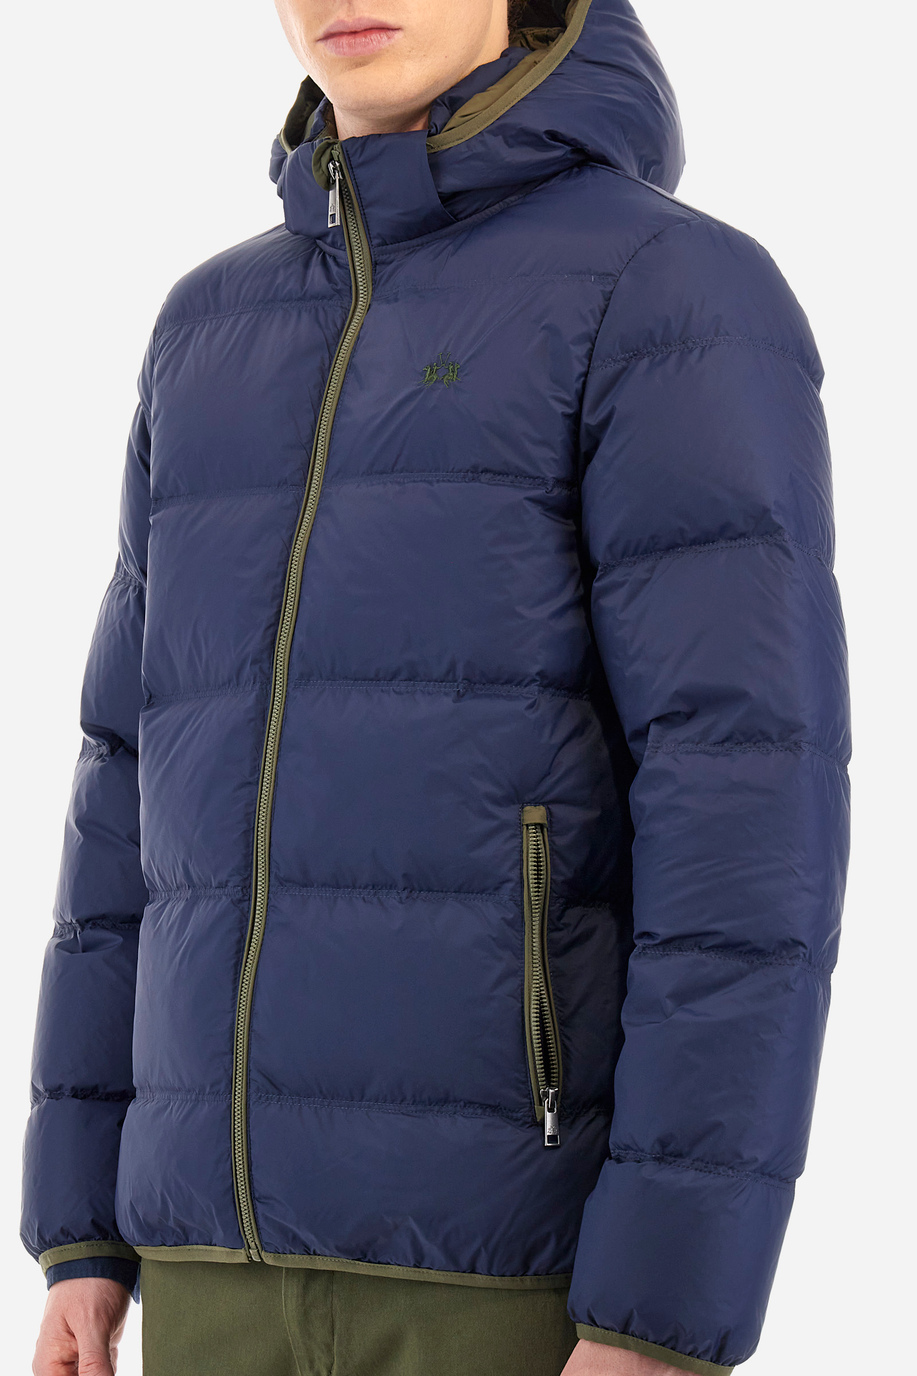 Outdoor giacca uomo regular fit - Way - Capispalla | La Martina - Official Online Shop